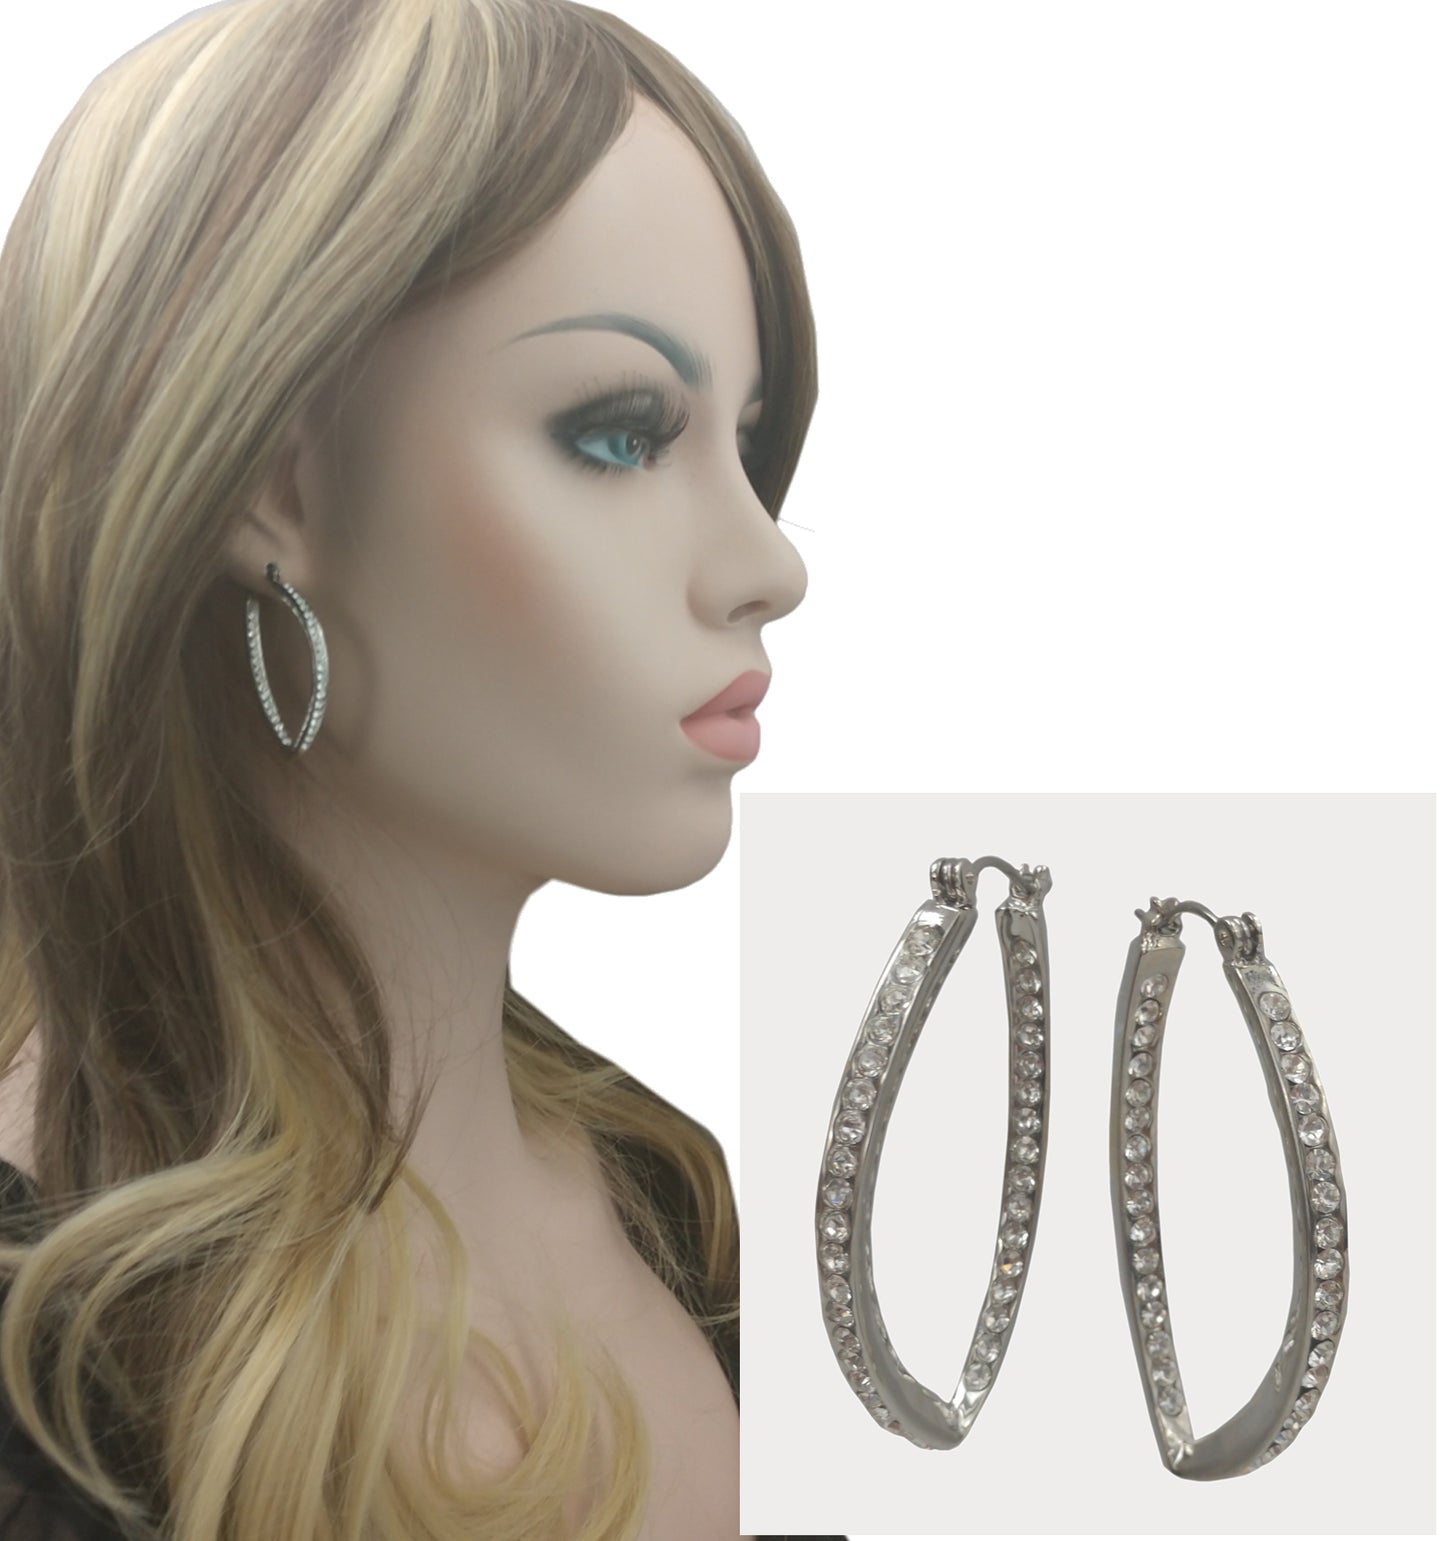 Abstract Silver Tone Clear Rhinestone Studded Hoop Earrings Pierced  1 3/4"